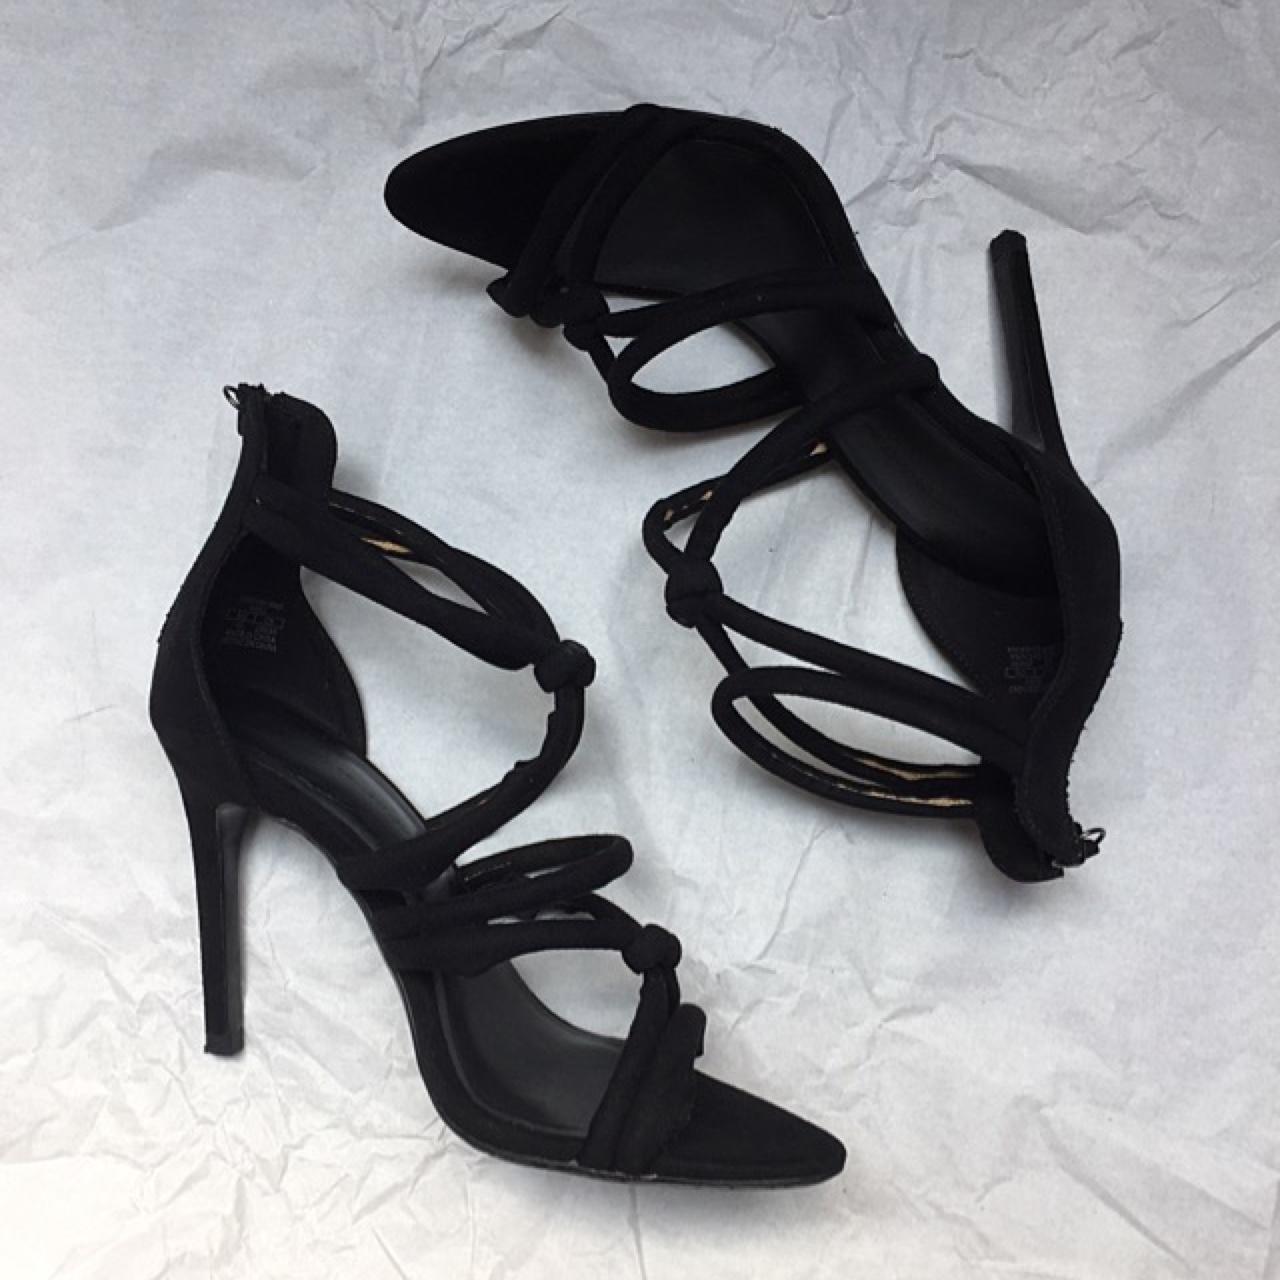 Zara knotted strappy high stiletto sandal heels in... - Depop